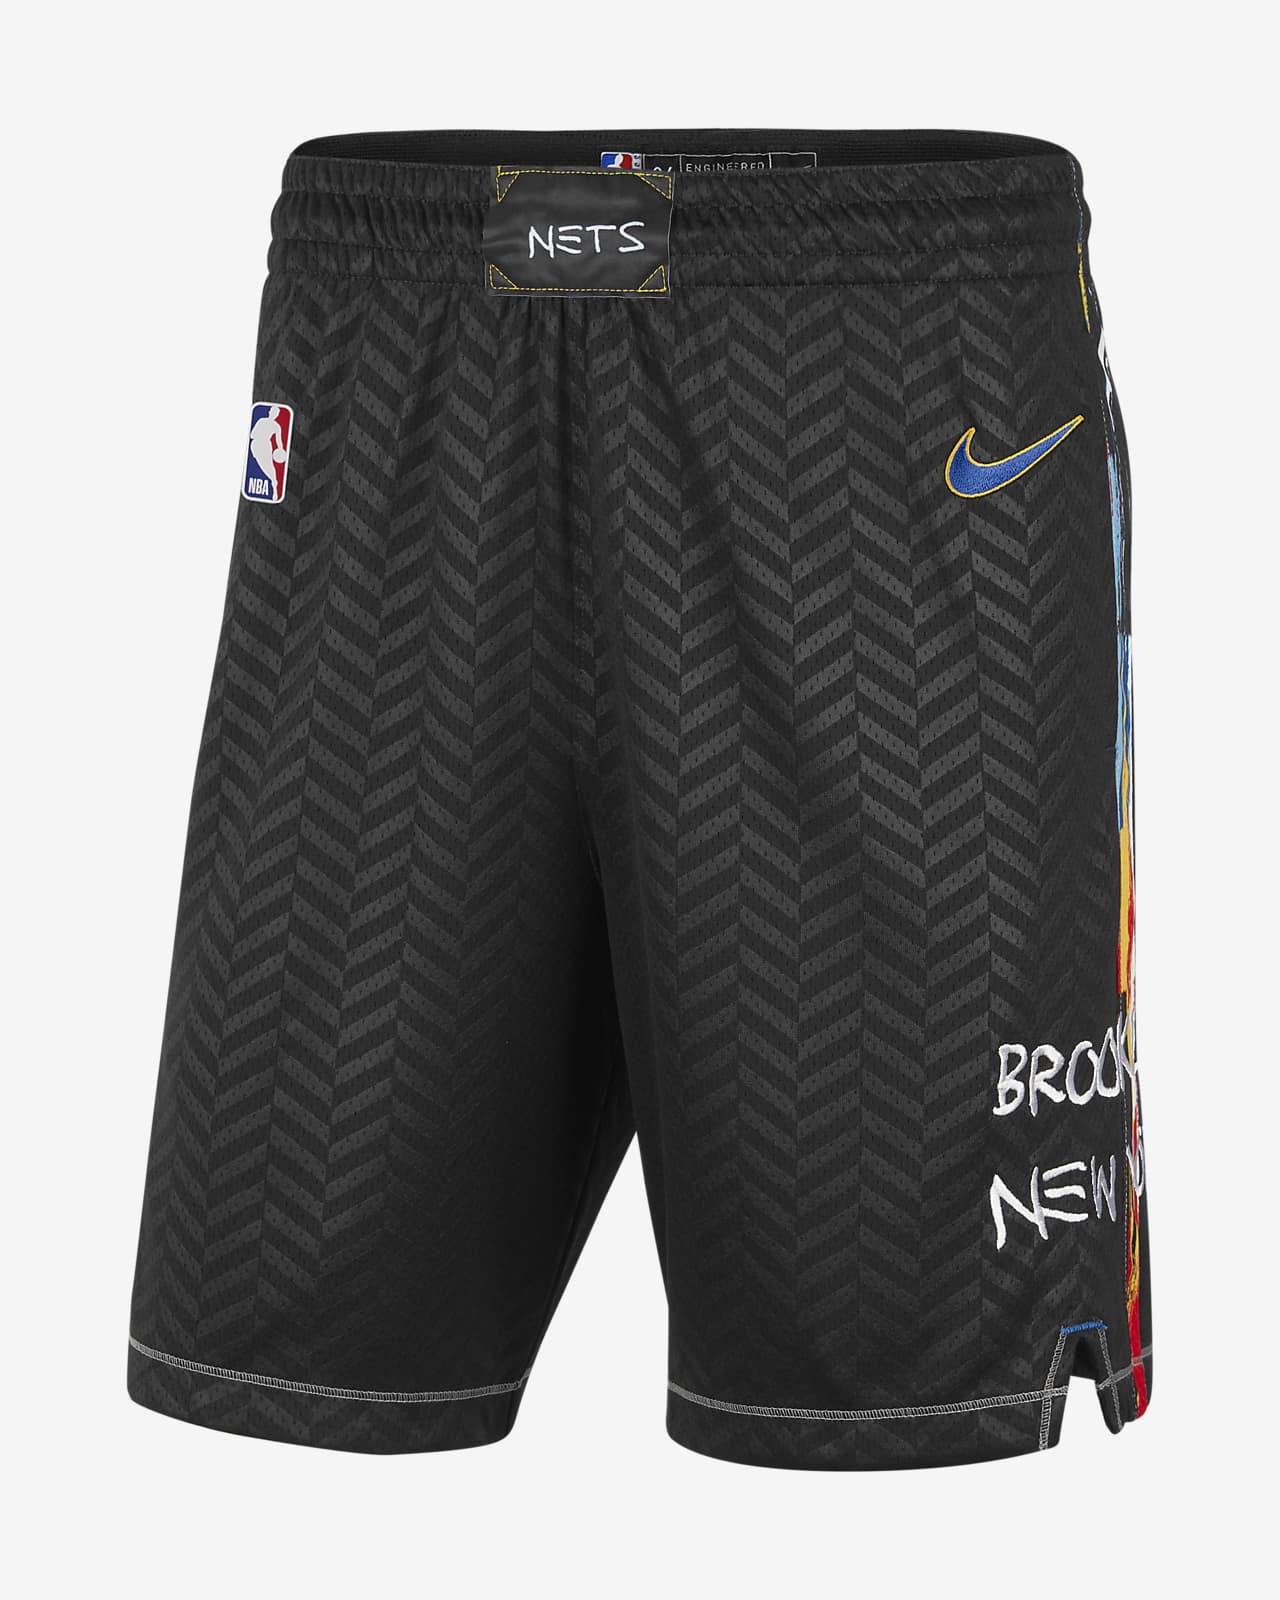 Short Nike NBA Swingman Brooklyn Nets City Edition 2020 pour Homme